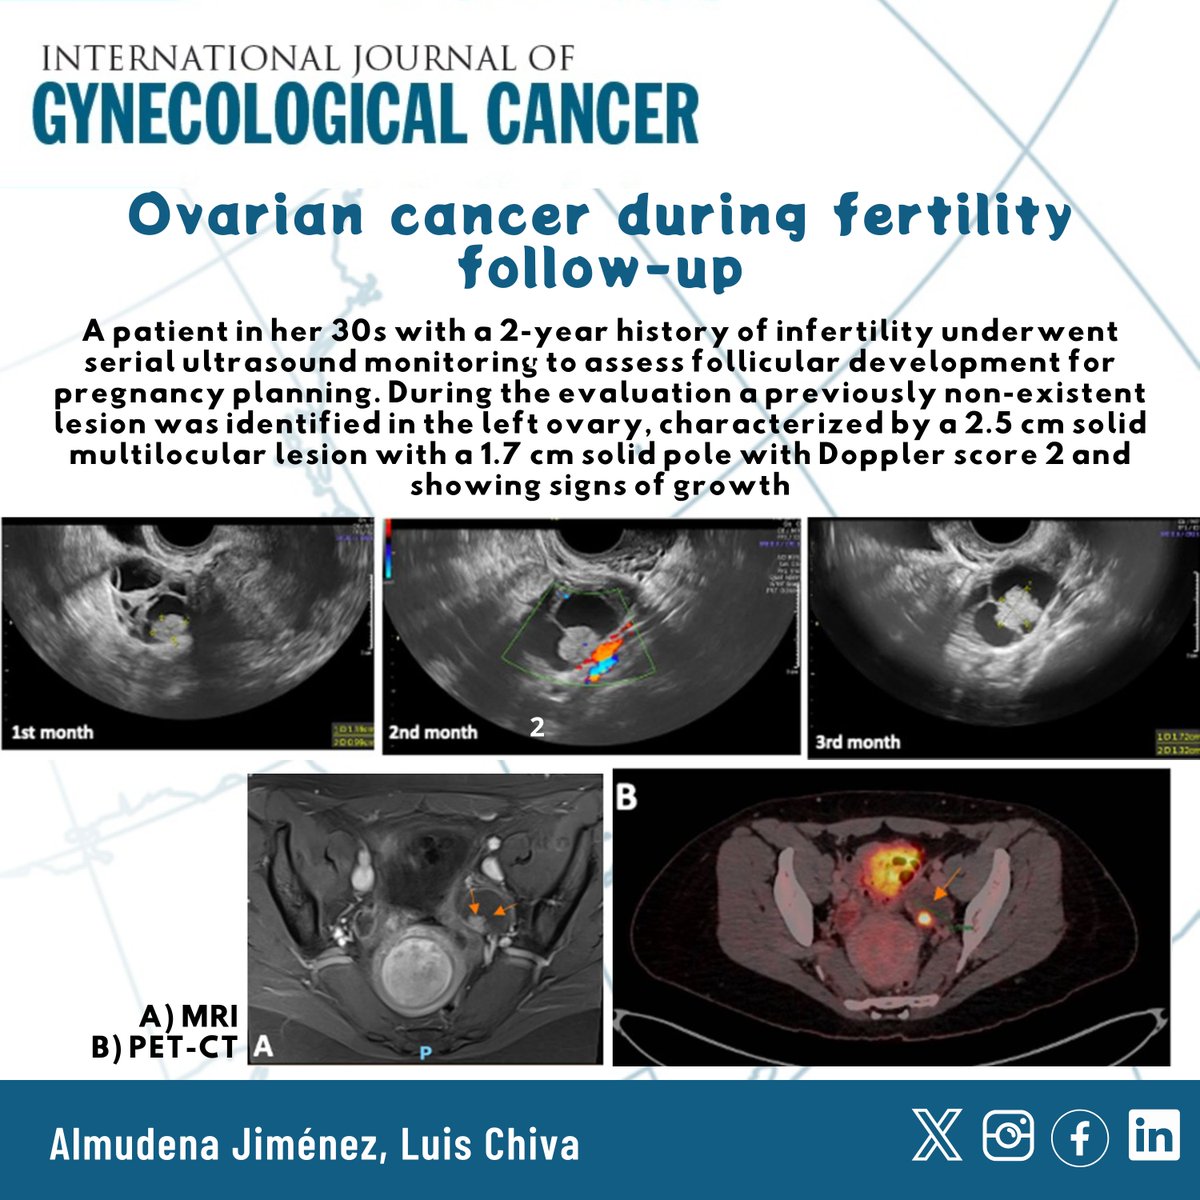 #Images Ovarian cancer during fertility follow-up @lchiv4 📷 bit.ly/3xoNyU1 @pedroramirezMD @HsuMd @JayrajAarthi @AndreFernandes2 @IGCSociety @ESGO_society @ENYGO_official @OncoAlert @IJGCfellows @GynMe4